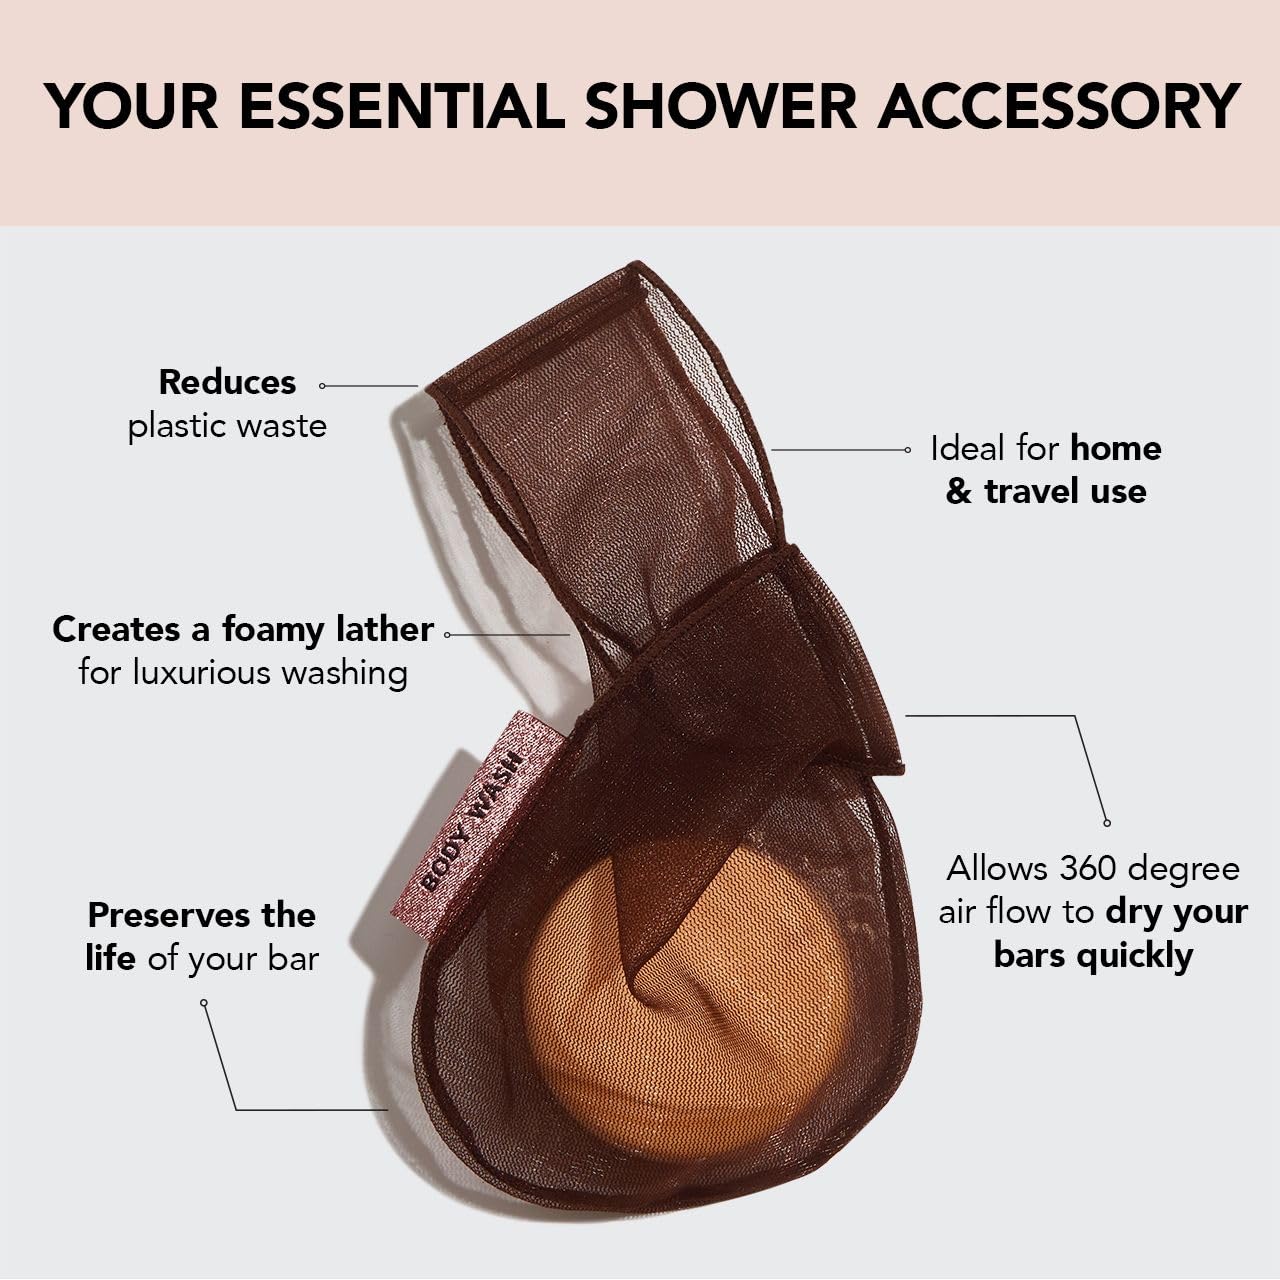 Shampoo & Body Bar Soap Saver Bag by Kitsch | Sustainable Bathroom